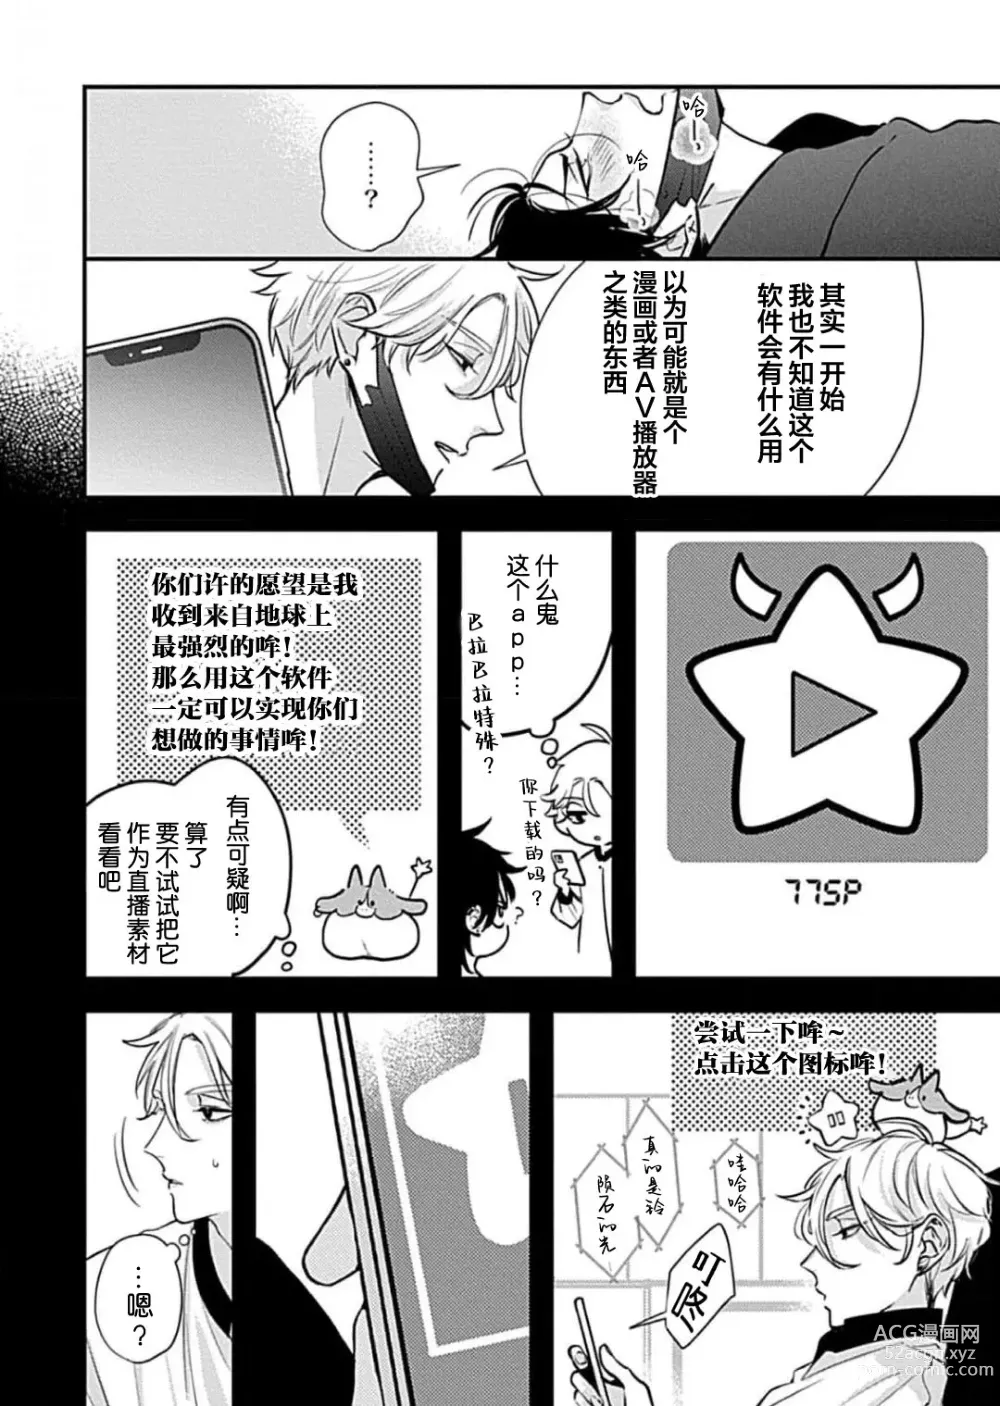 Page 30 of manga SSS Channel ｜SSS频道